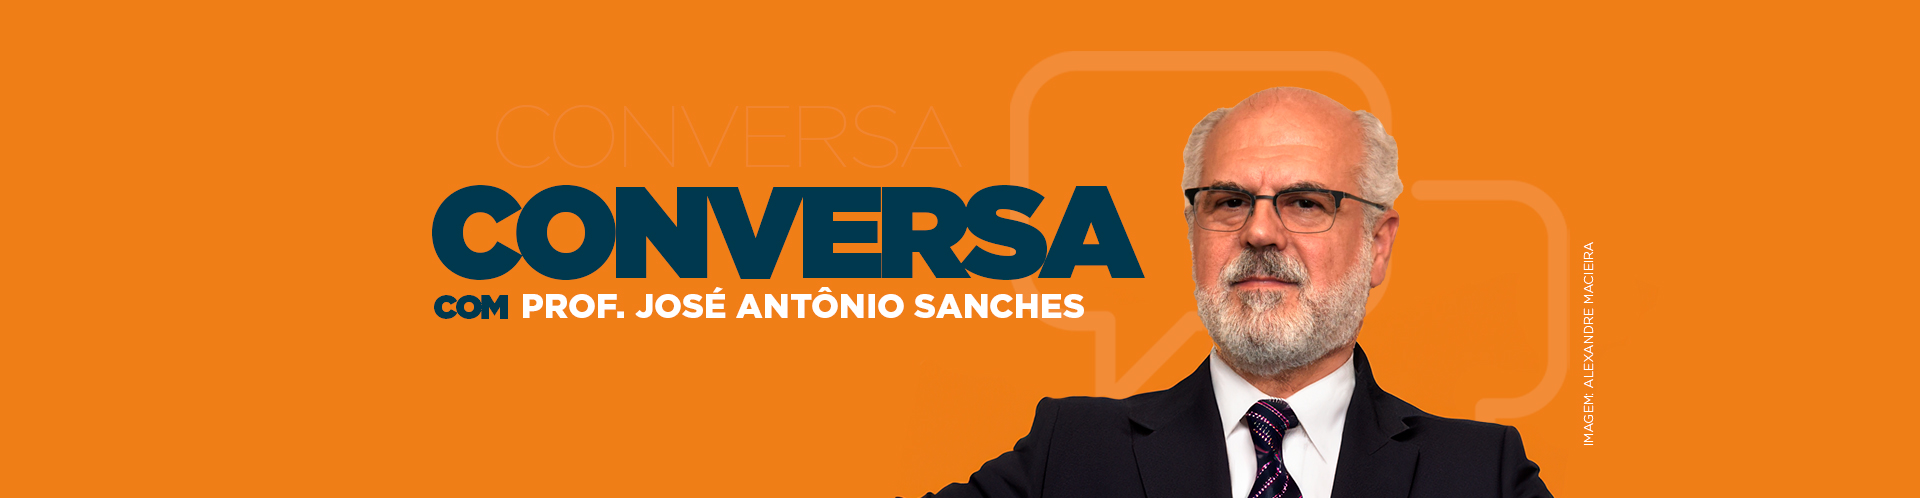 Conversa com Prof. José Antônio Sanches